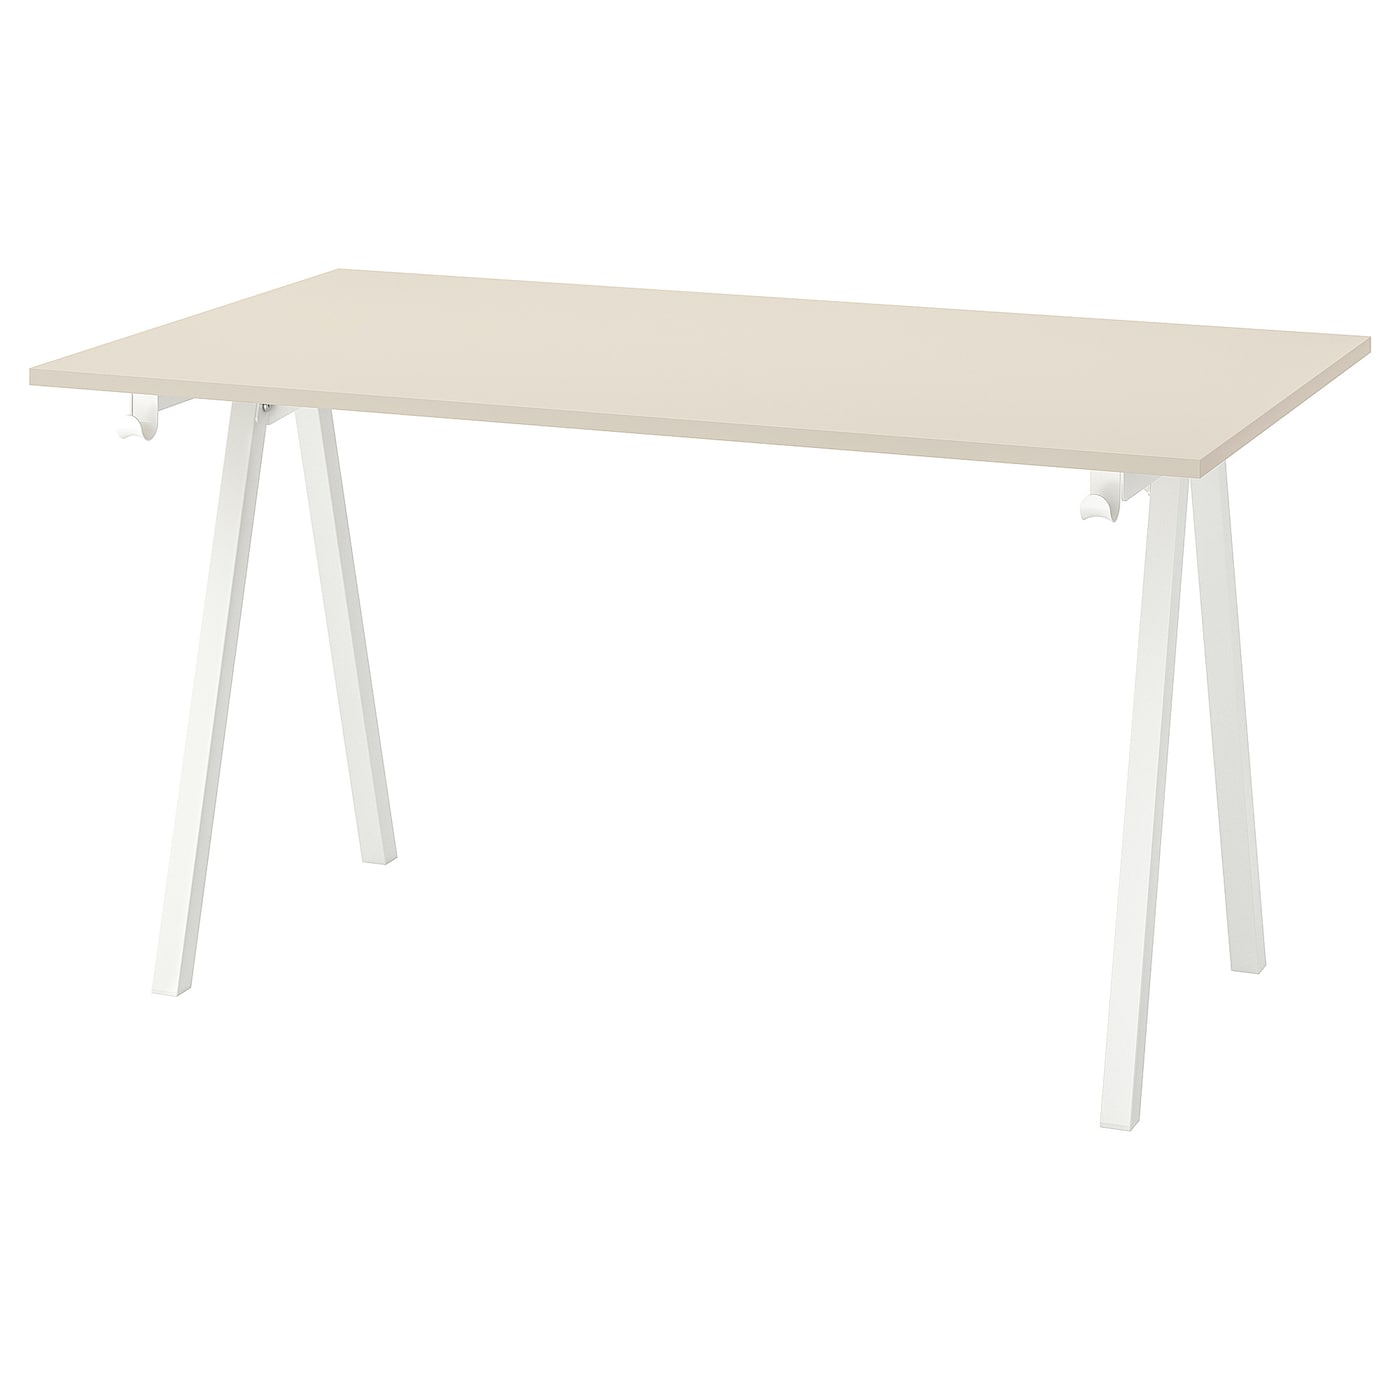 Письменный стол - IKEA TROTTEN, 140х80 см, бежевый/белый, ТРОТТЕН ИКЕА